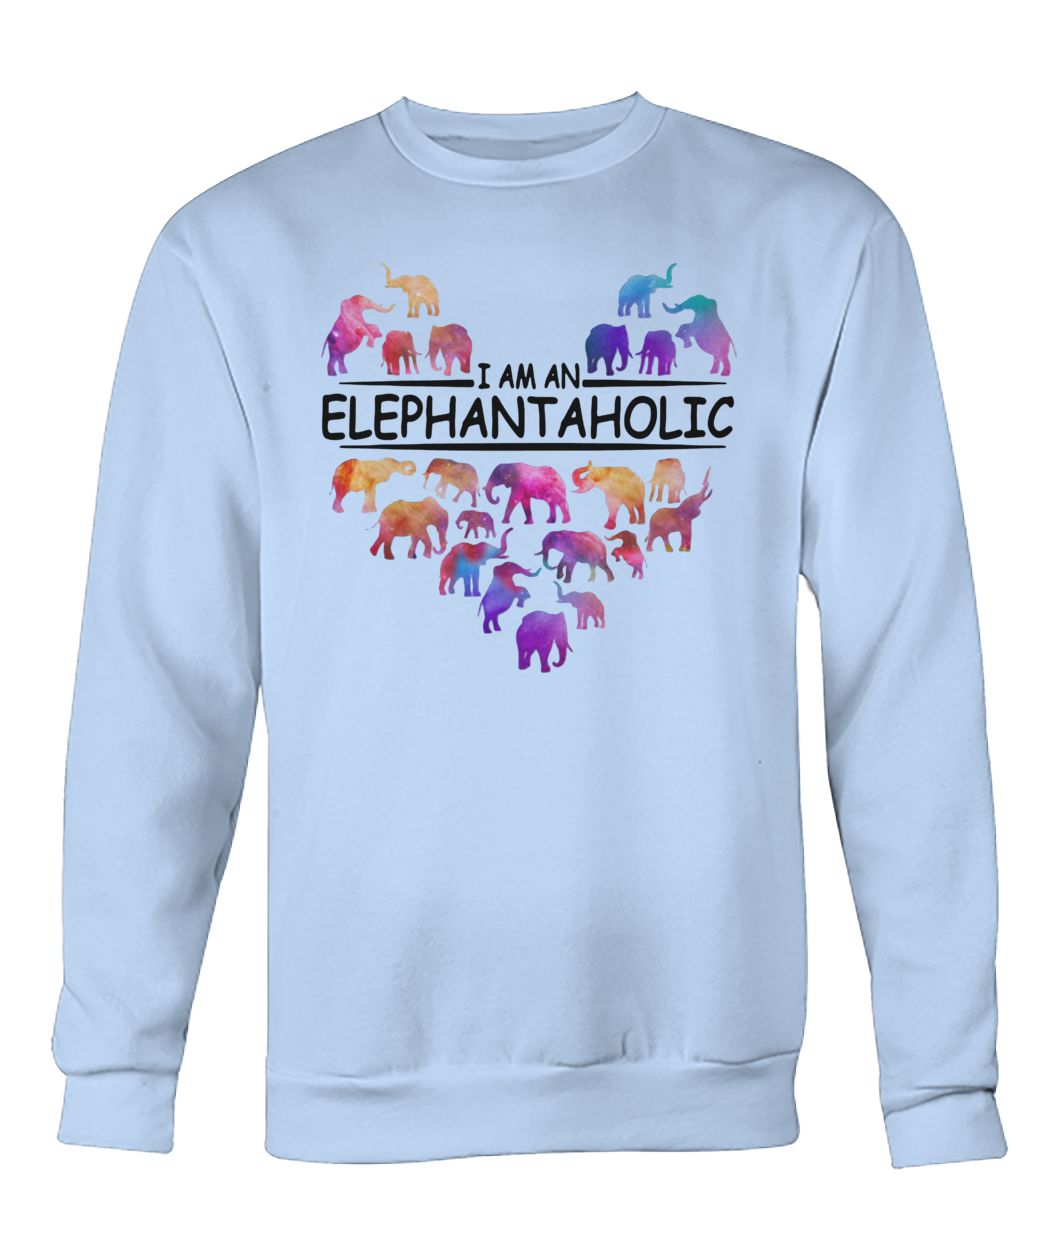 I am an elephant a holic crew neck sweatshirt